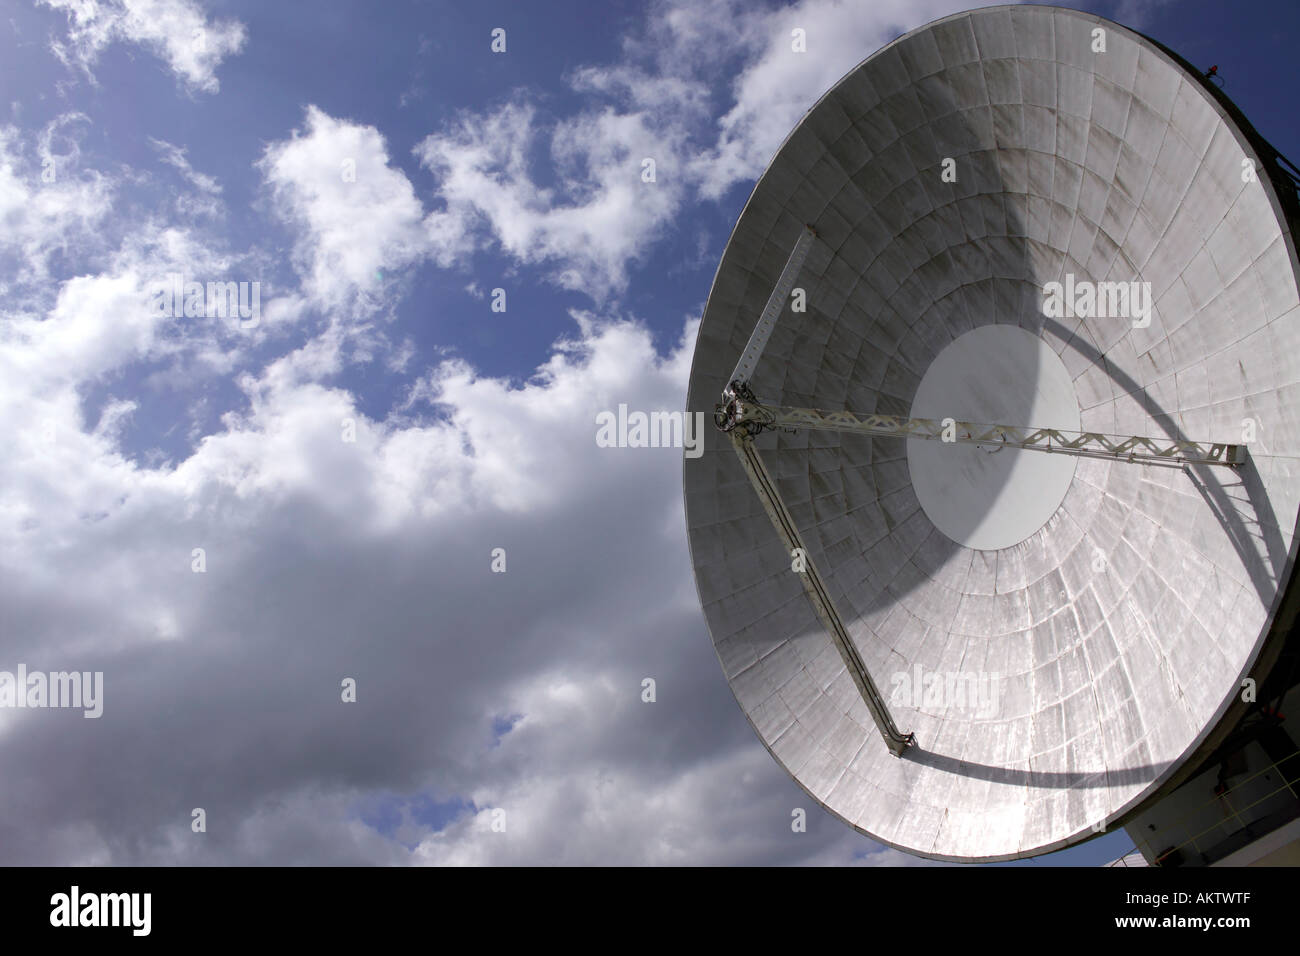 Arthur Parabolic Dish at BT Goonhilly Satellite Earth Station, Lizard Peninsula, Cornwall, England, UK. Stock Photo